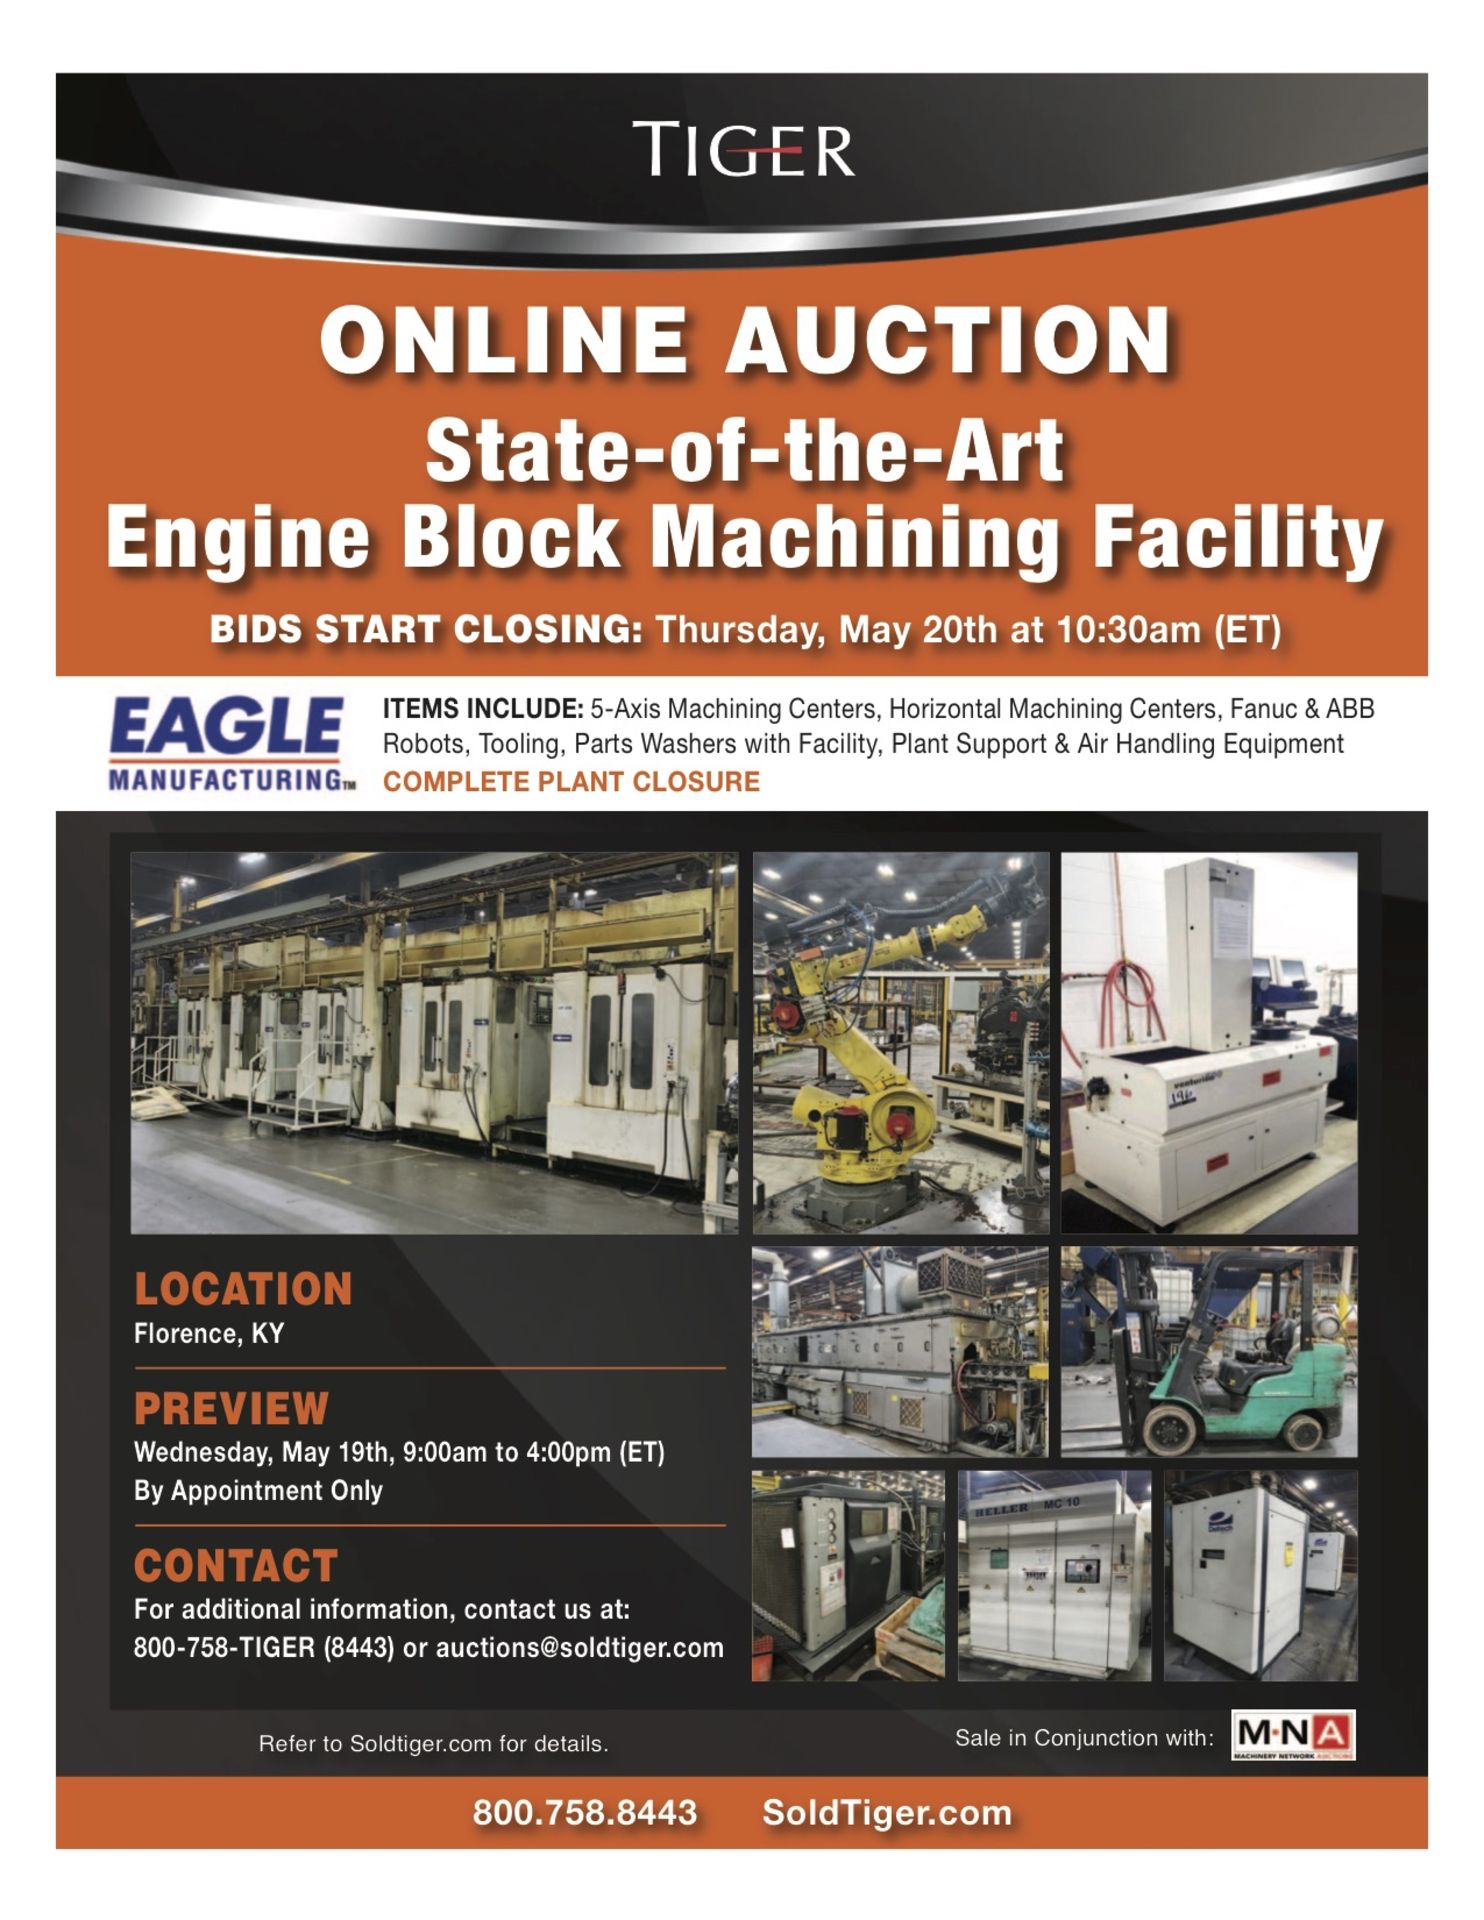 Eagle Manufacturing Brochure & Video